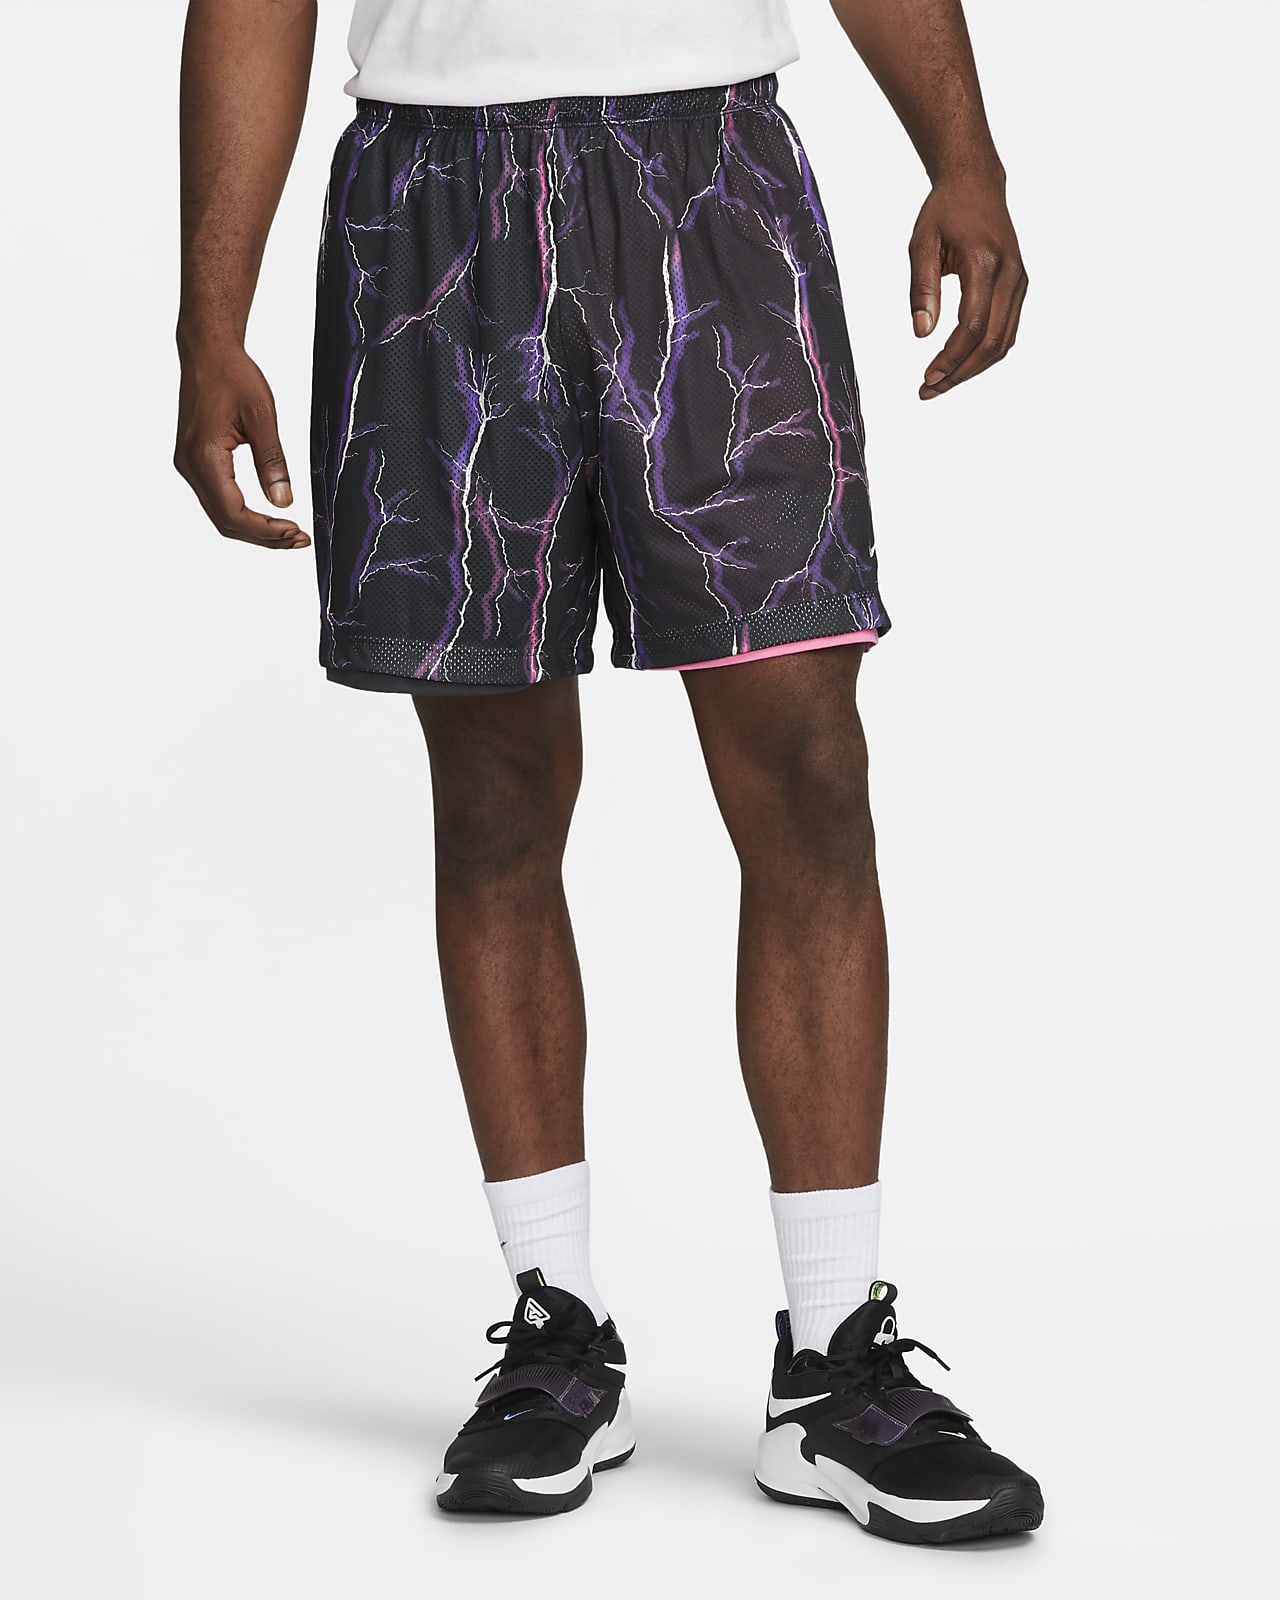 Nike Men's Premium 6" Basketball Shorts.